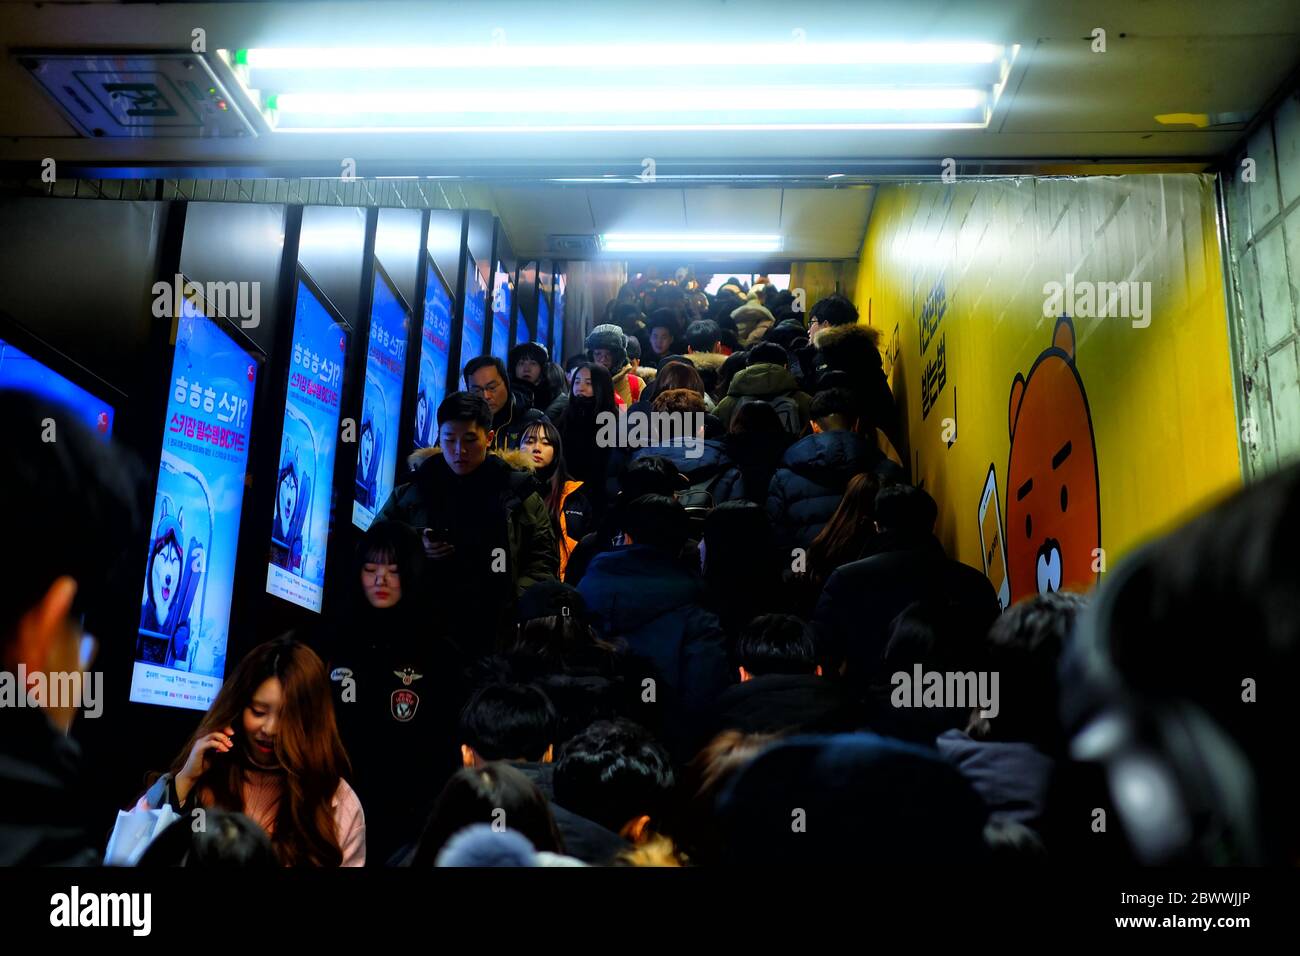 SEOUL, SÜDKOREA - 29. DEZEMBER 2018: Menschenmenge an der Hongik University Station. U-Bahn ist ein Hauptverkehrsmittel in Seoul, Südkorea. Stockfoto